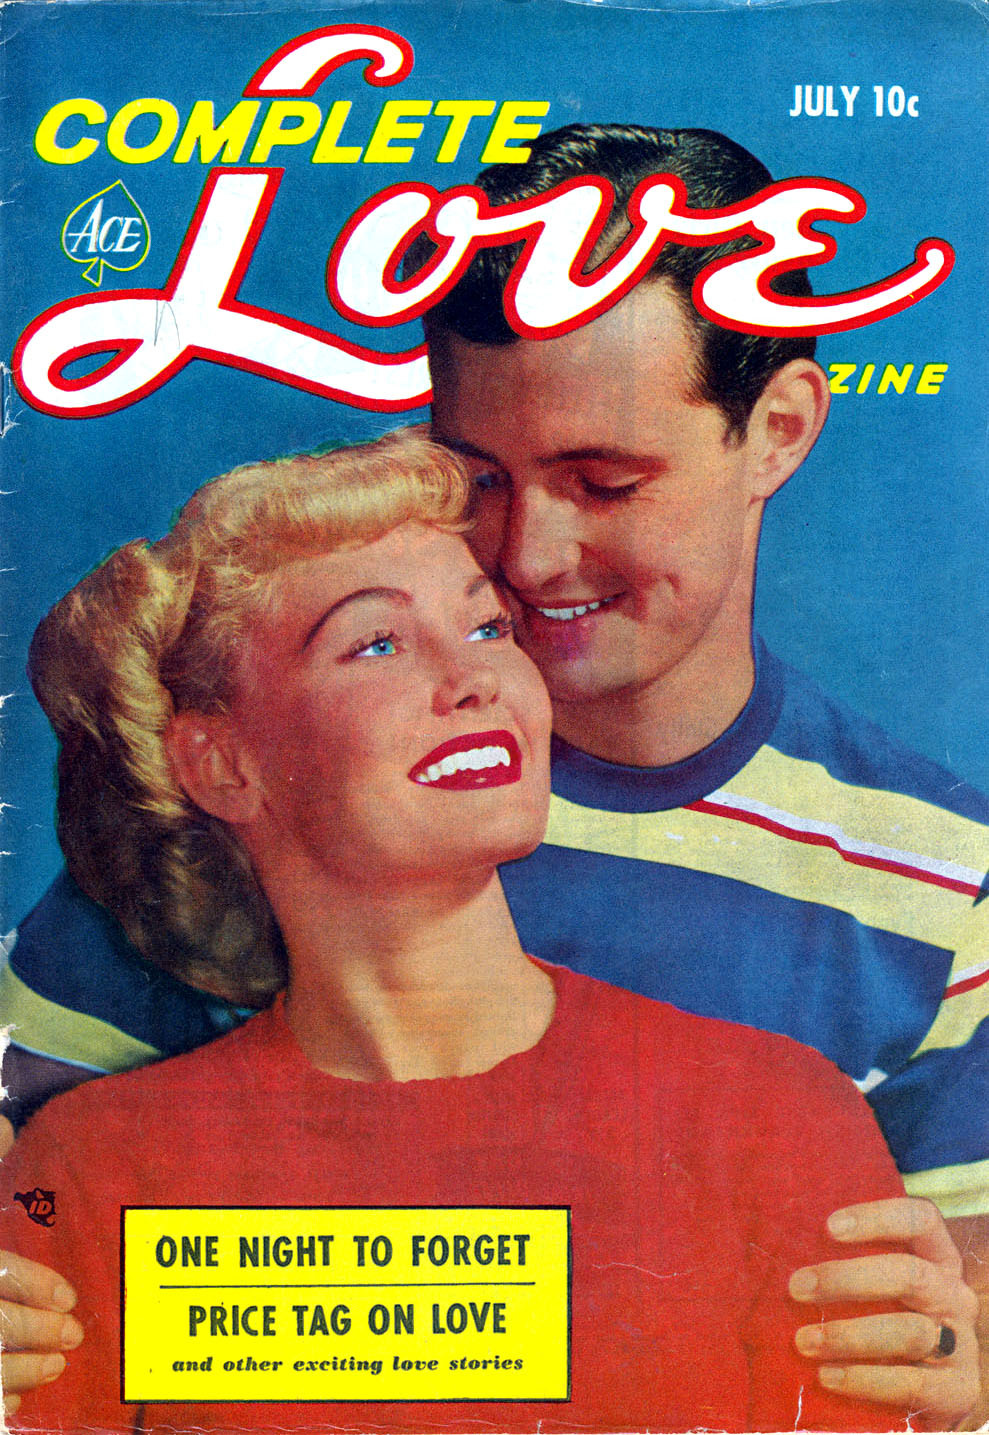 Complete Love Magazine (Ace Magazines), vol.29 #3, July 1953